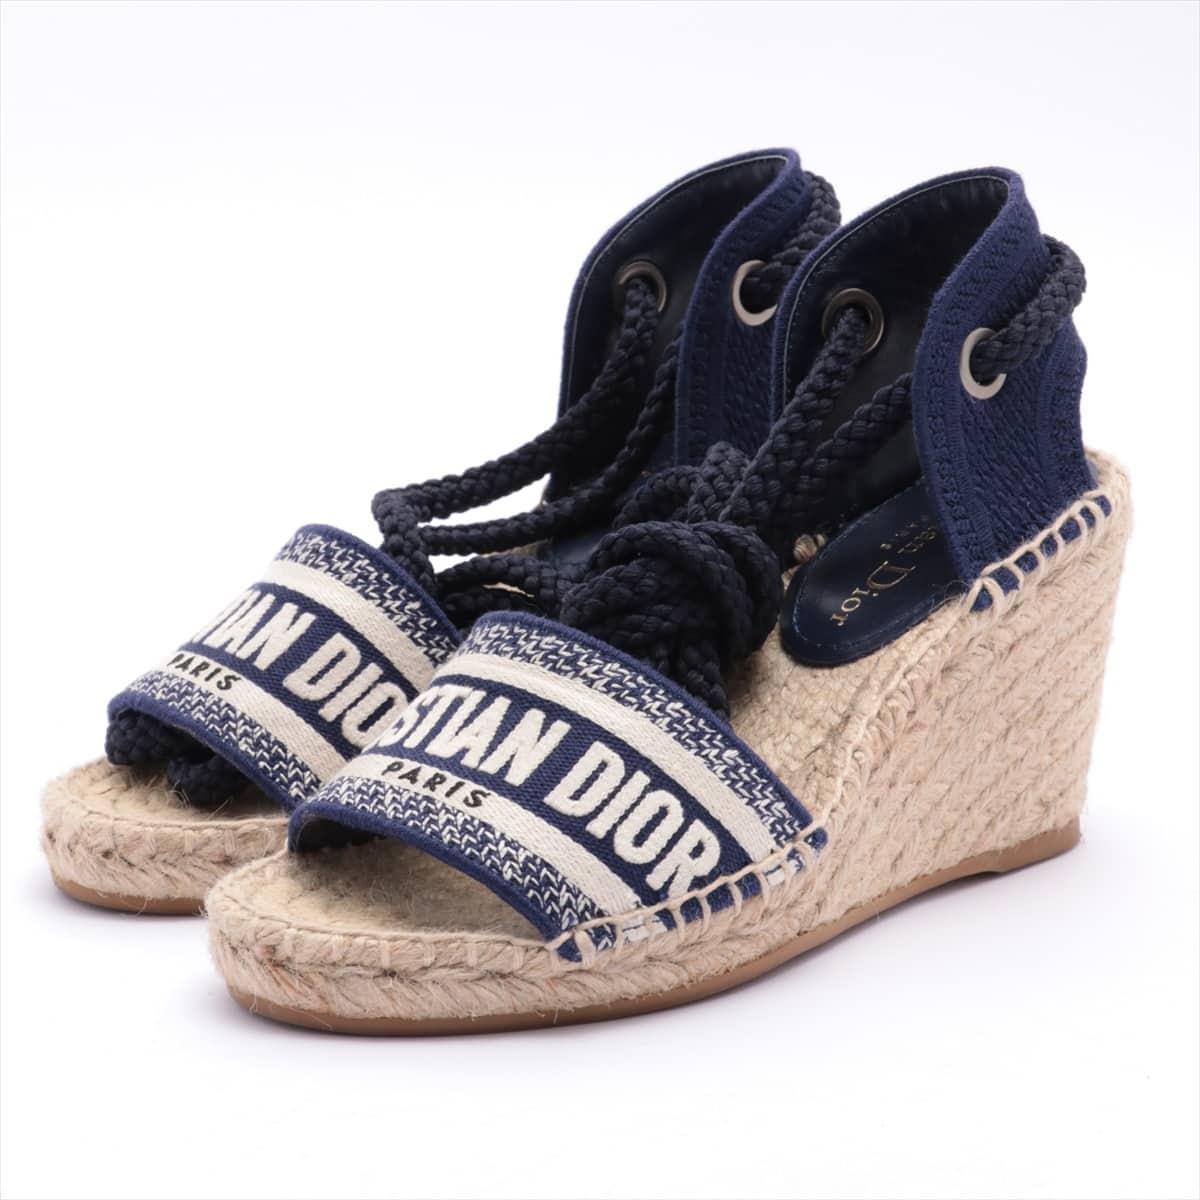 Christian Dior jute Wedge Sole Sandals 34 1/2 Ladies' Navy blue CL0120